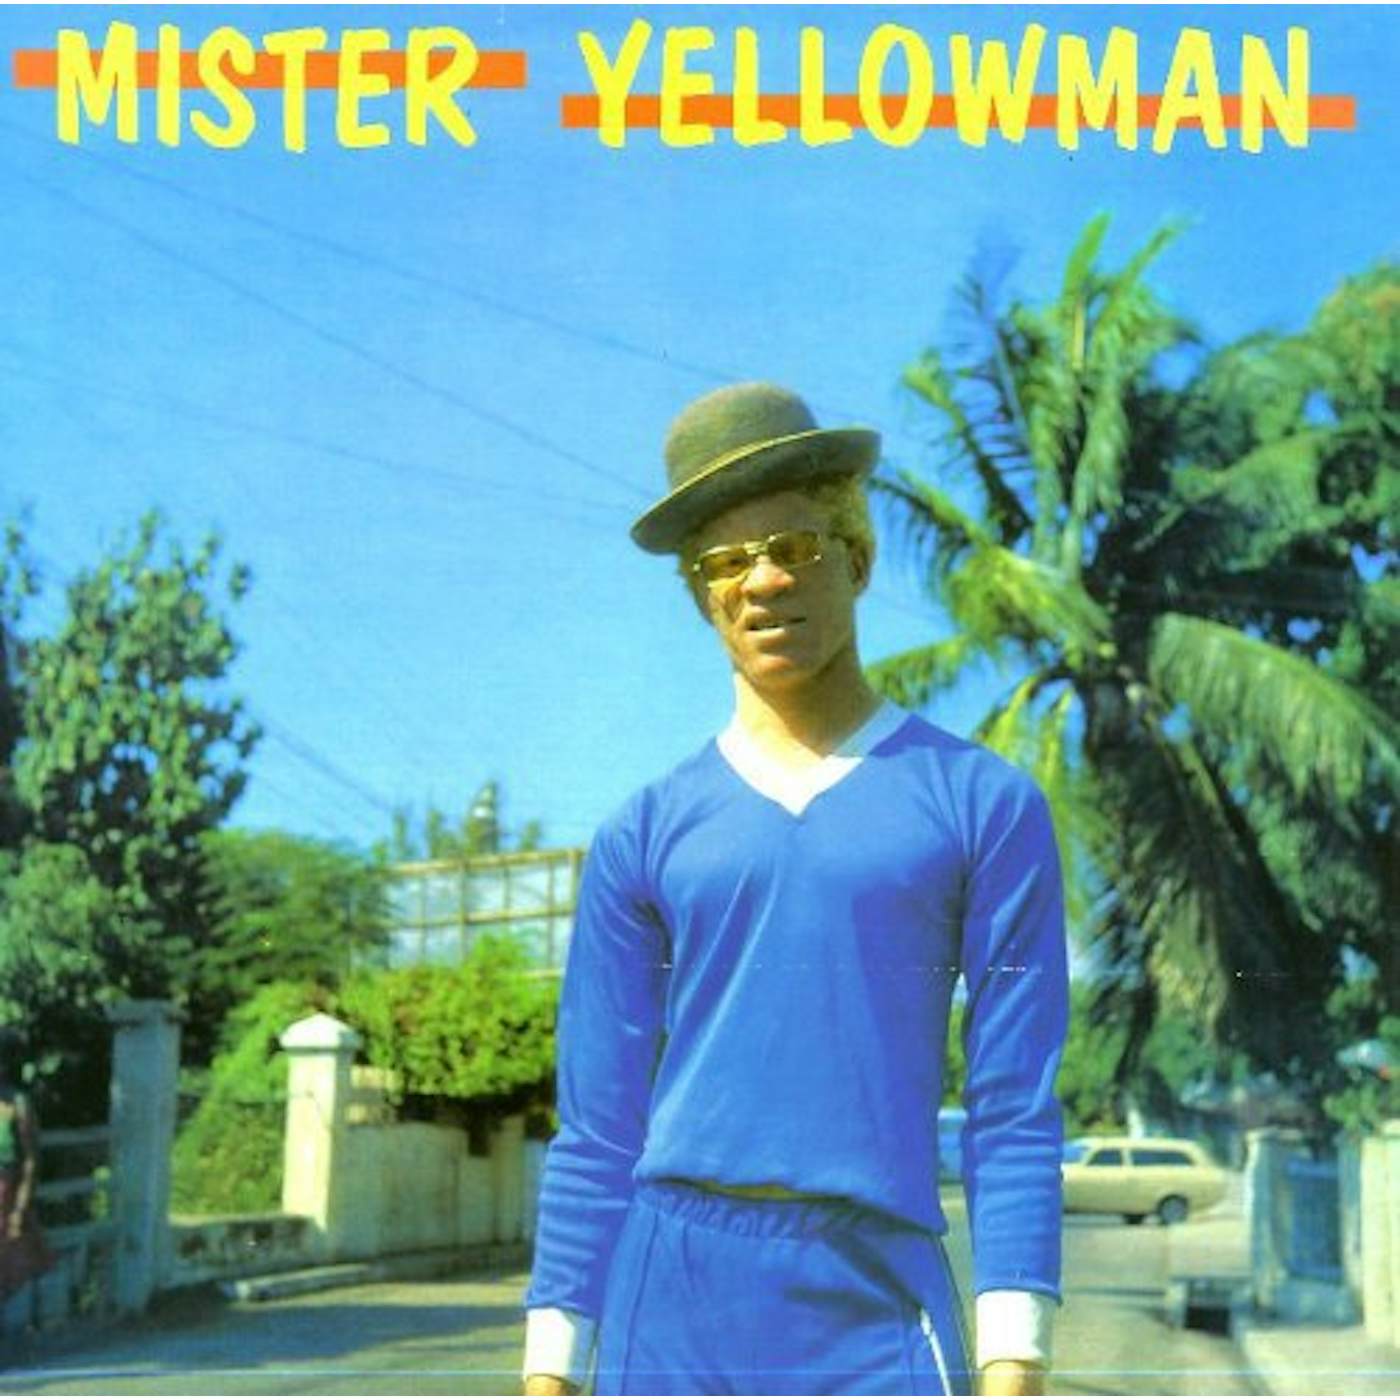 Mister Yellowman Vinyl Record